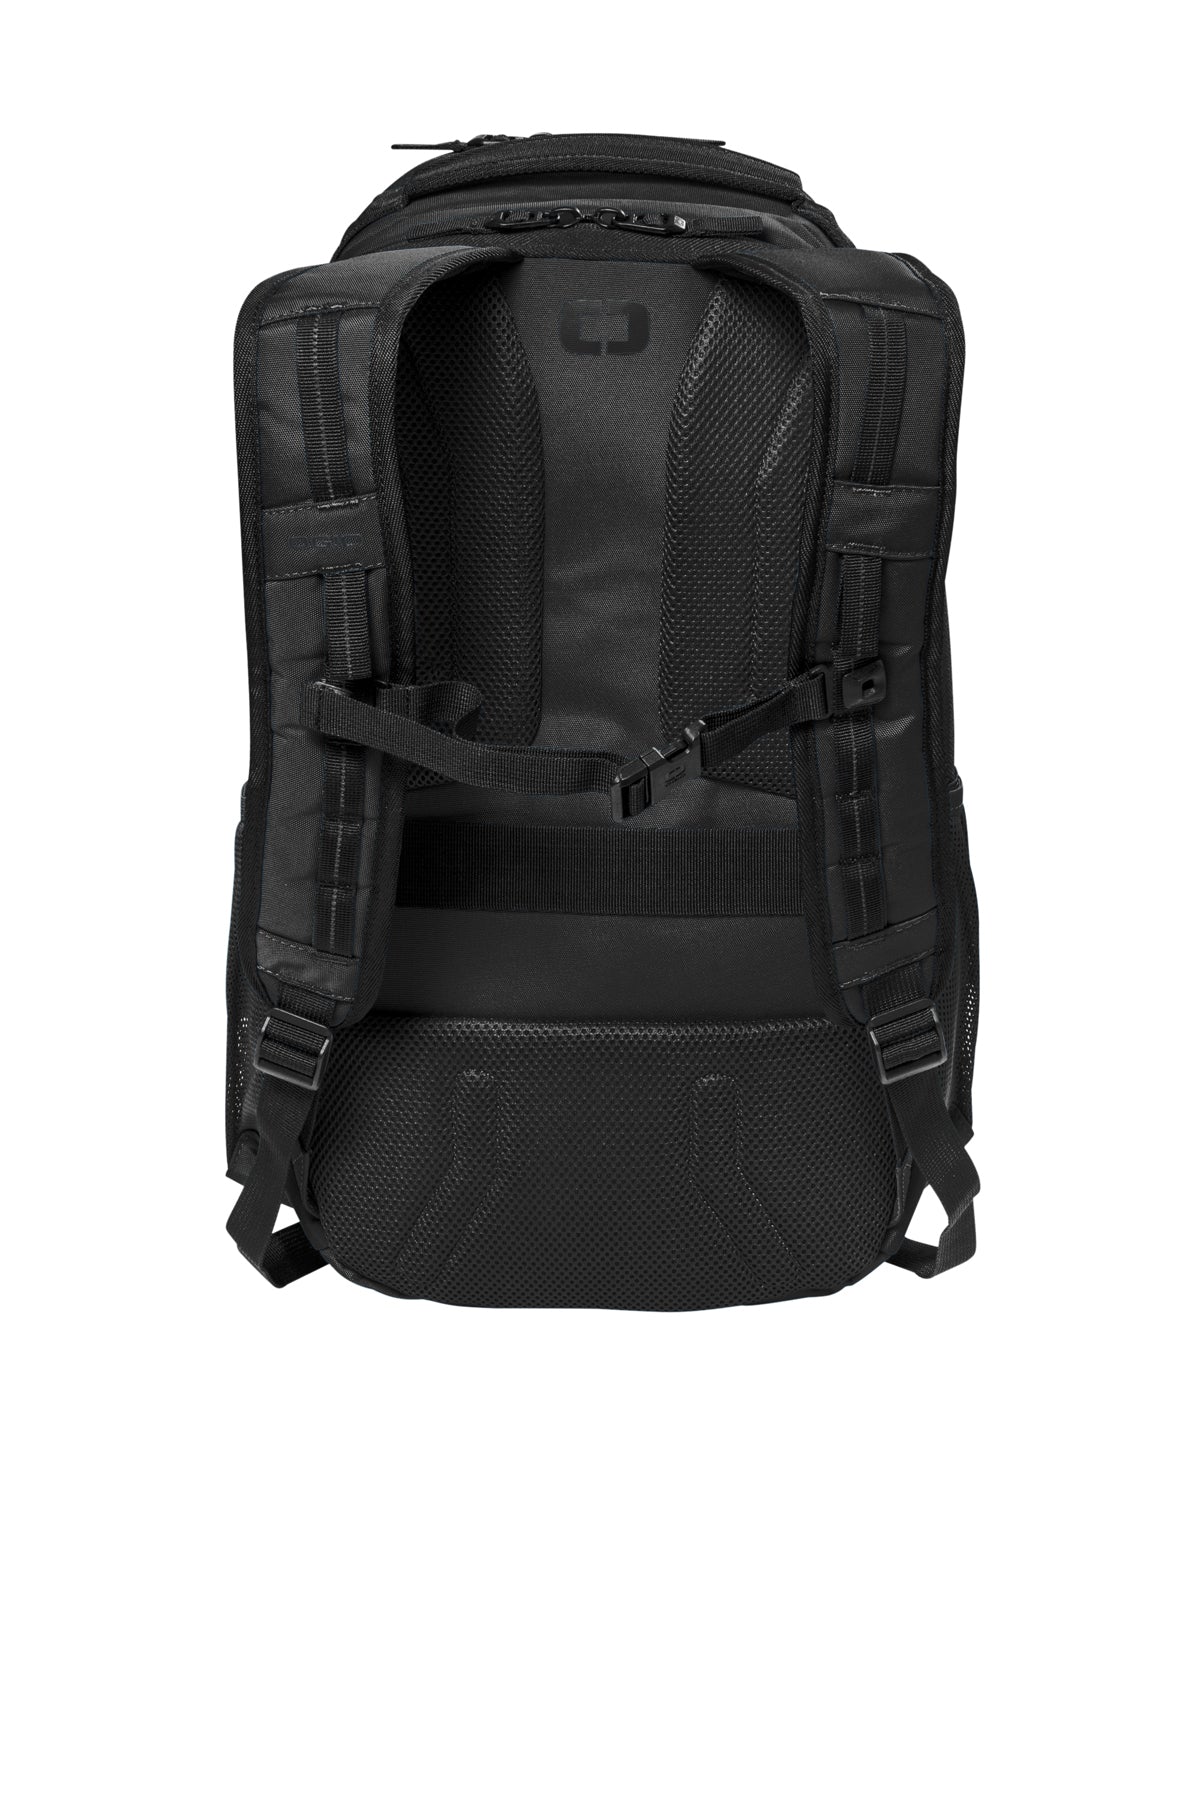 OGIO Transfer Customzied Backpacks, Blacktop